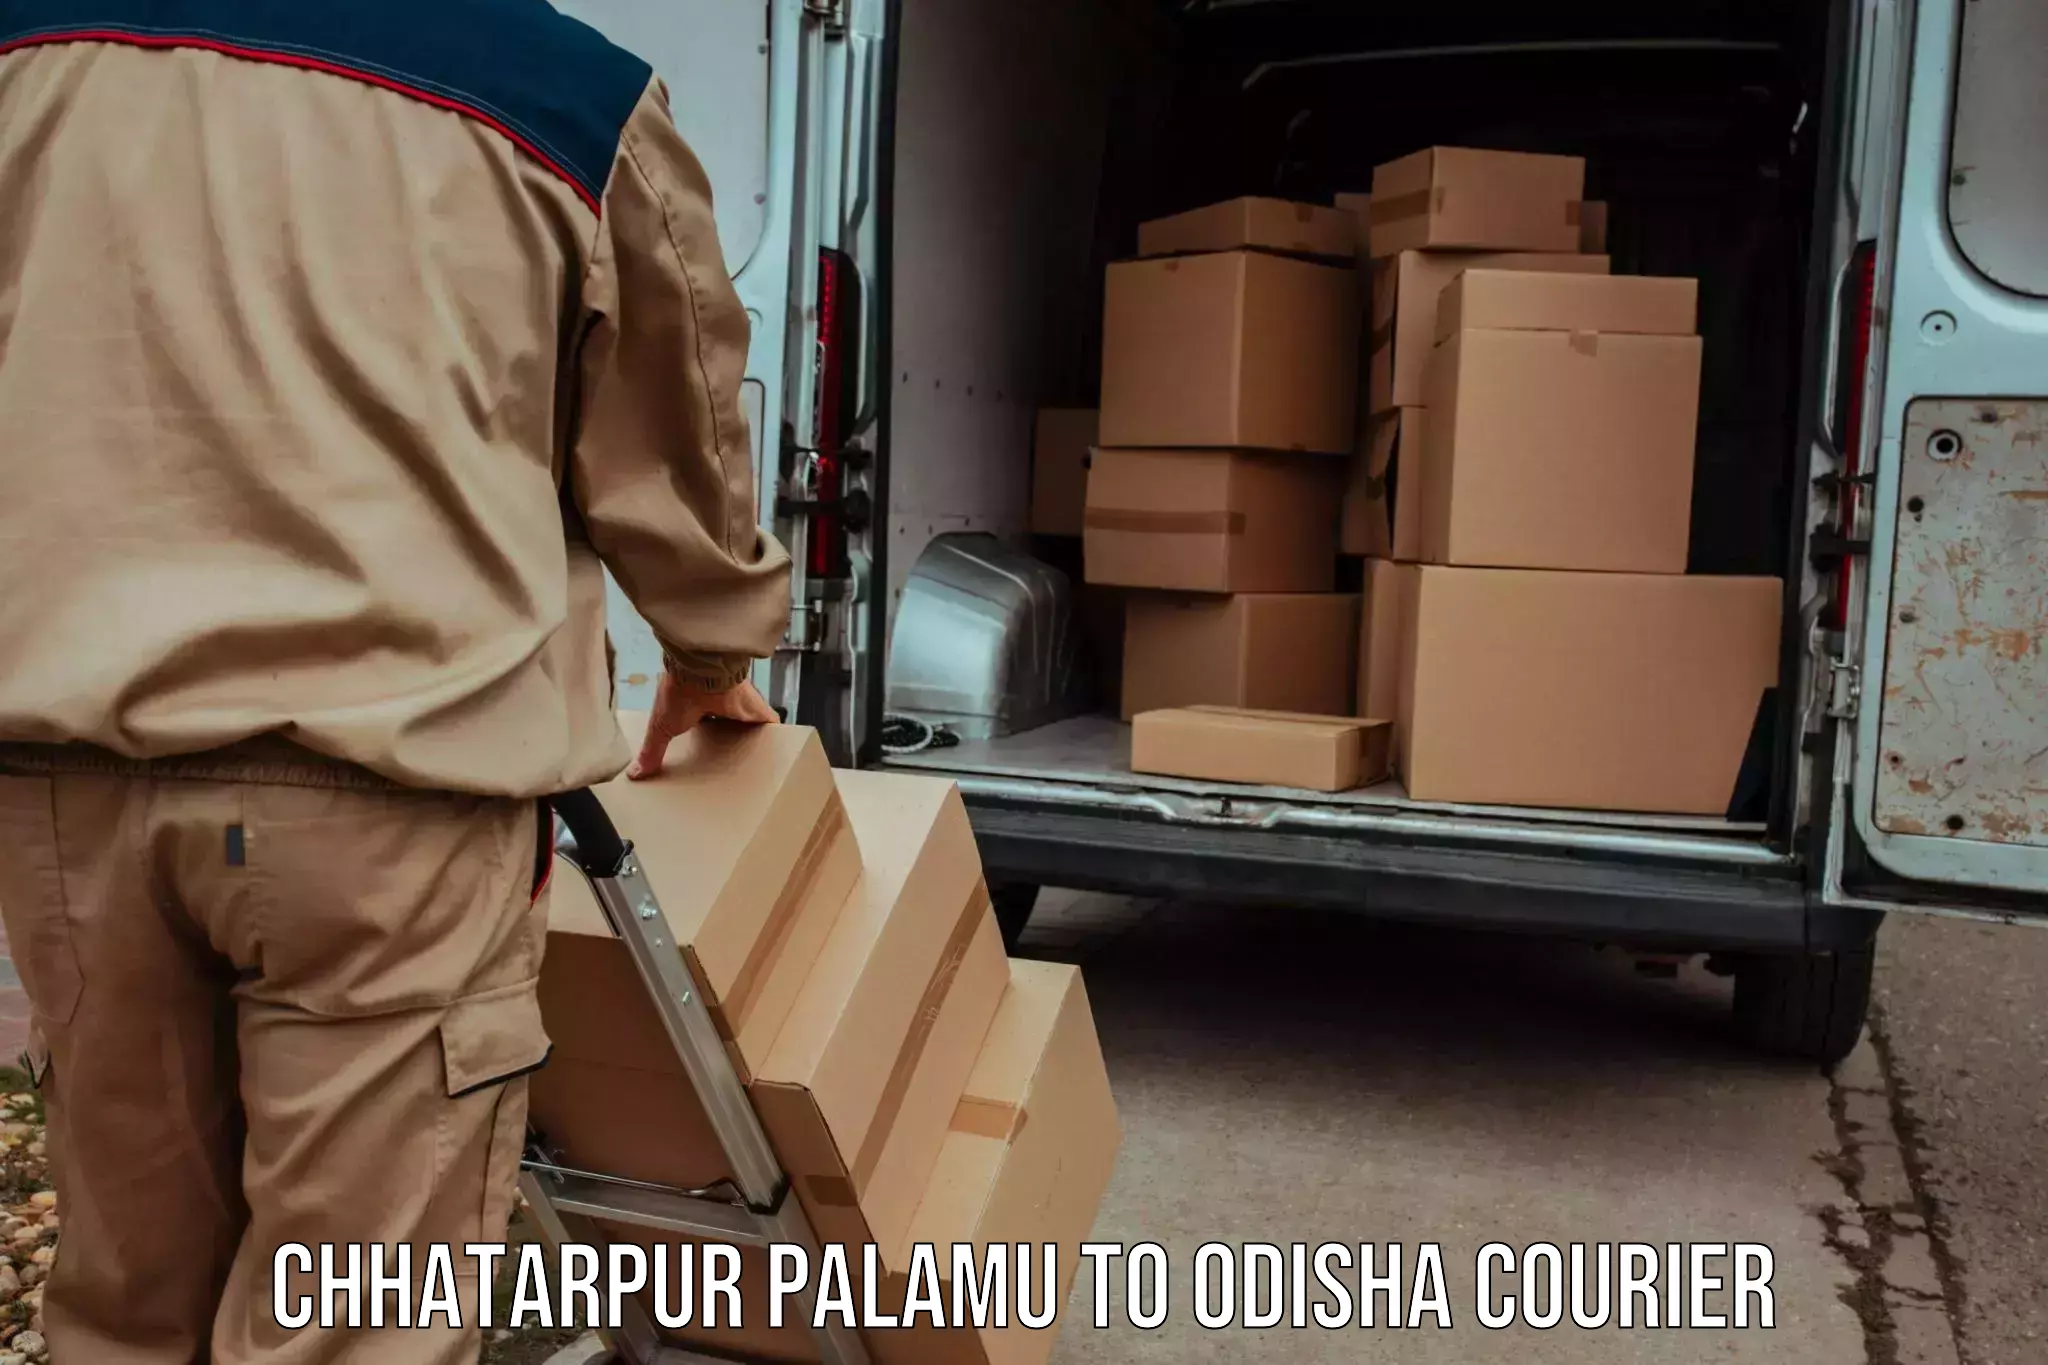 Reliable courier service Chhatarpur Palamu to Balasore